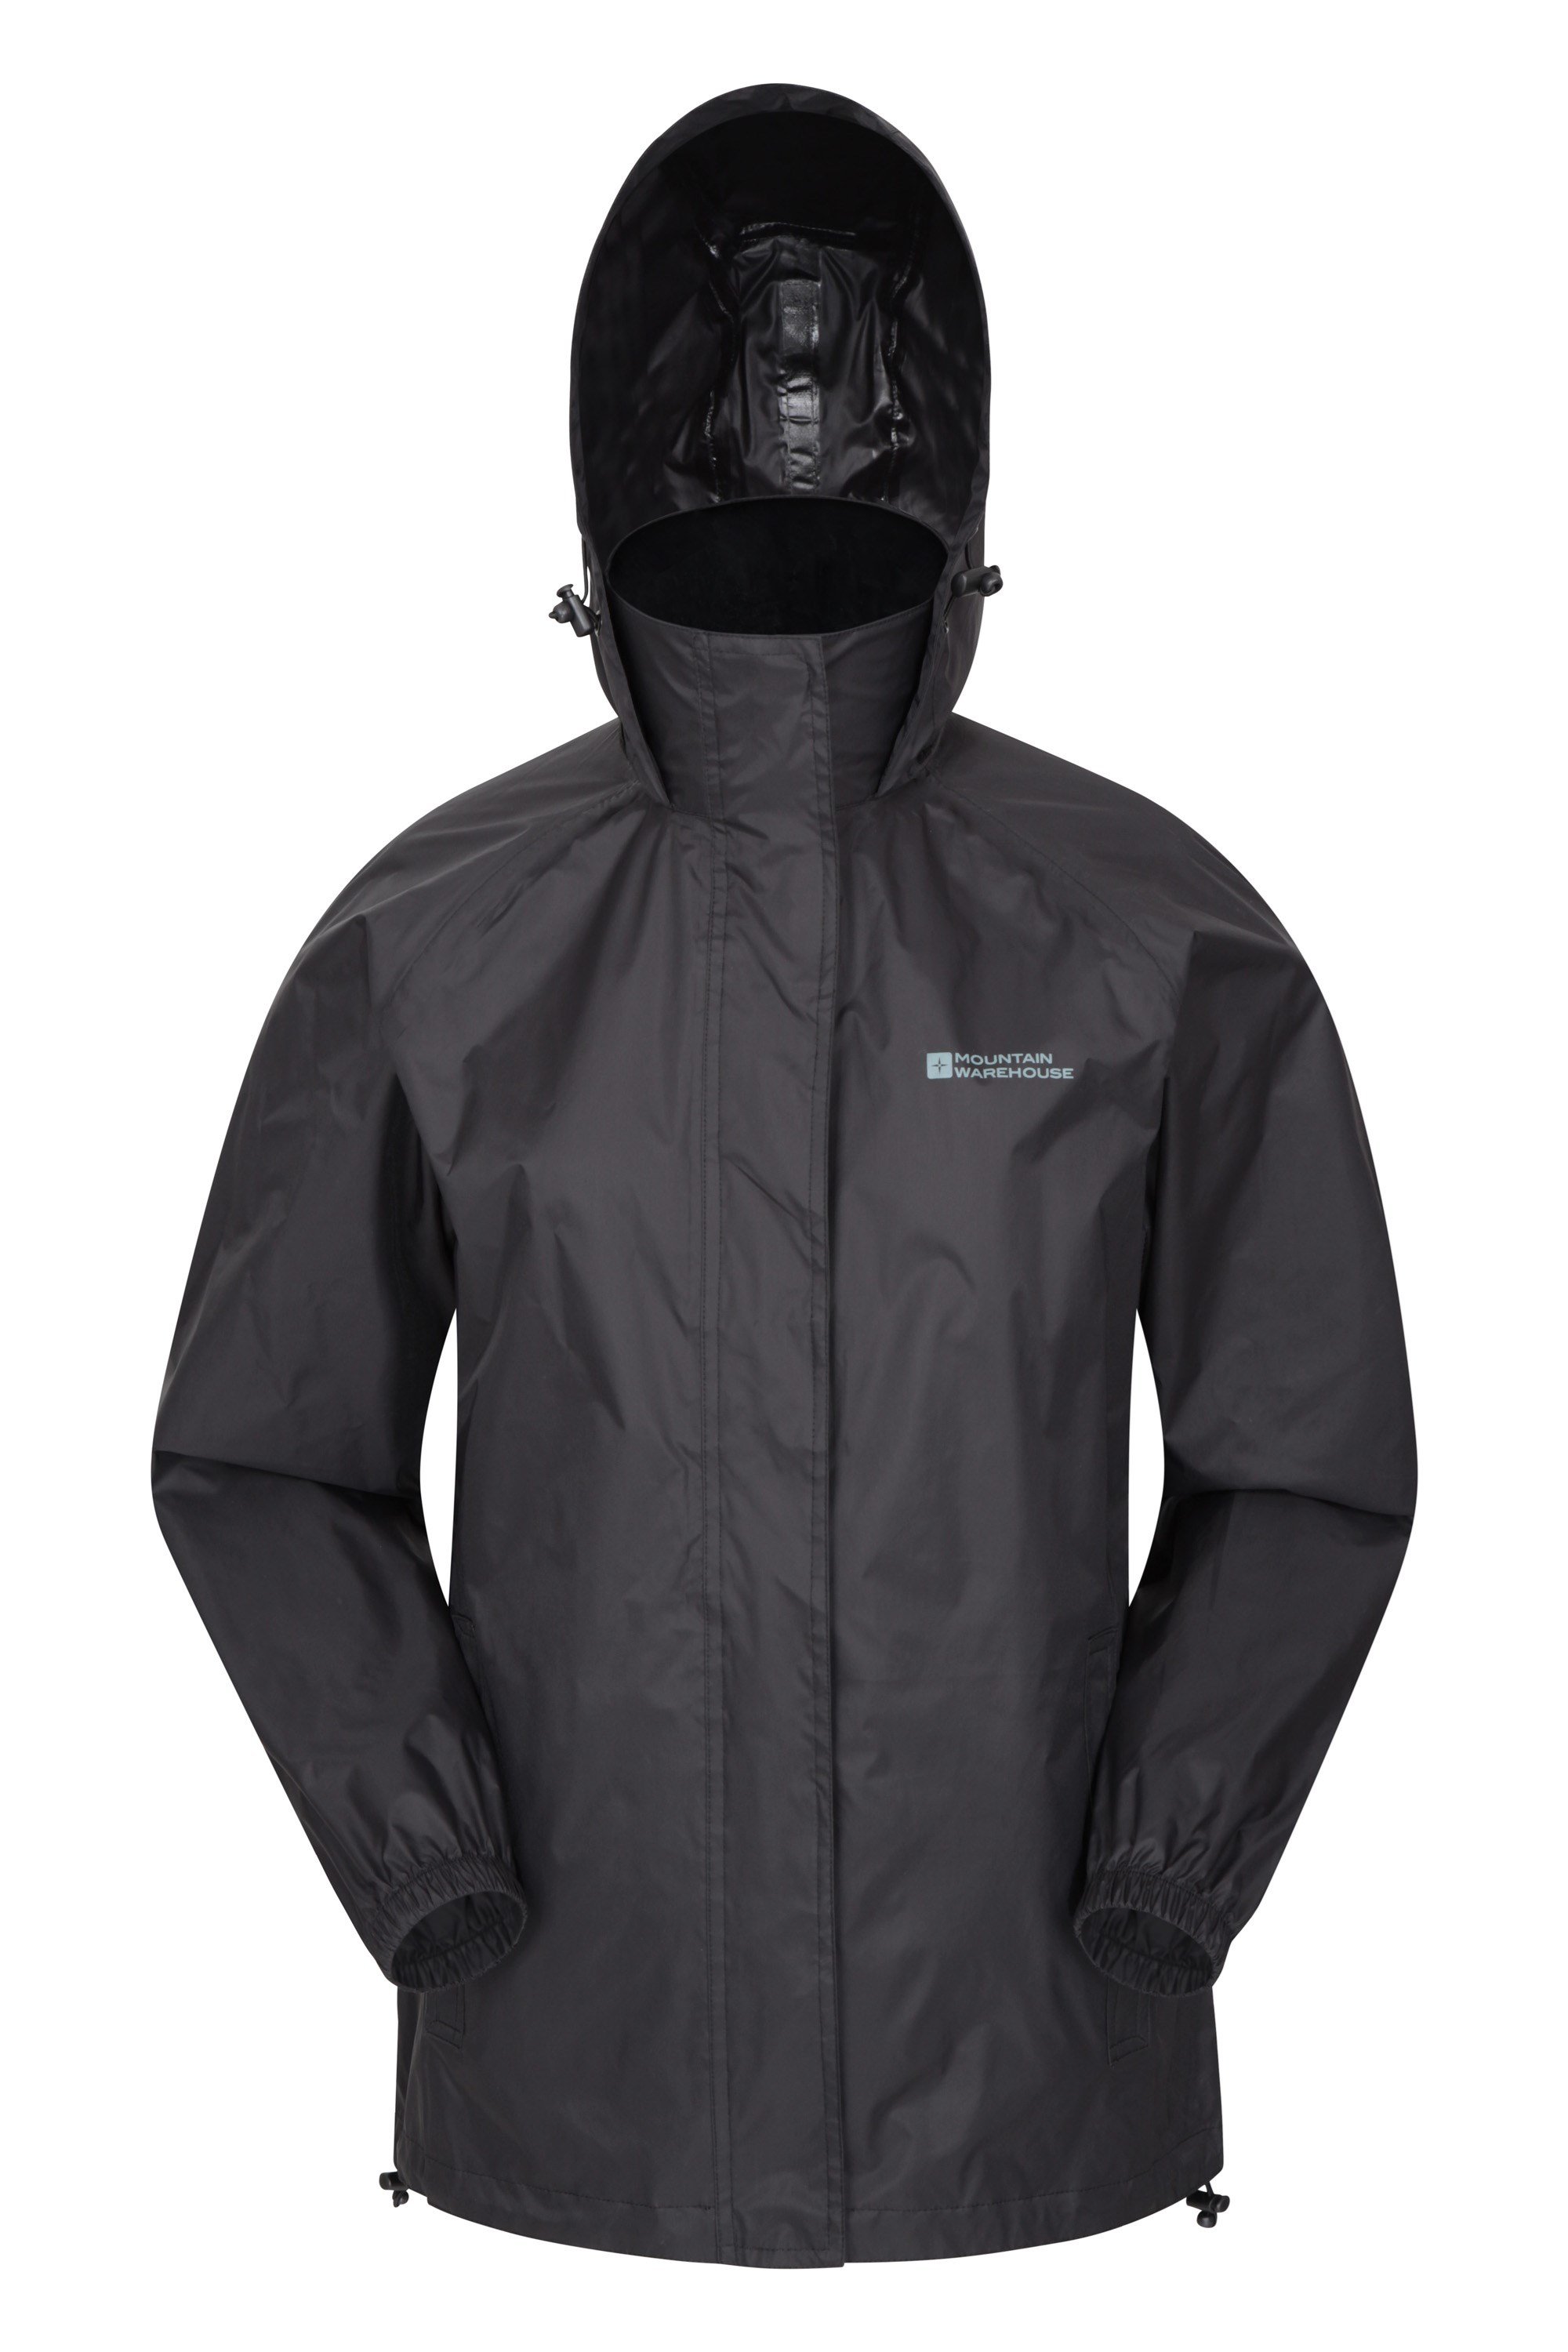 Mountain Warehouse Lake Womens Padded Waterproof Jacket Breathable Taped Seams Front Pockets